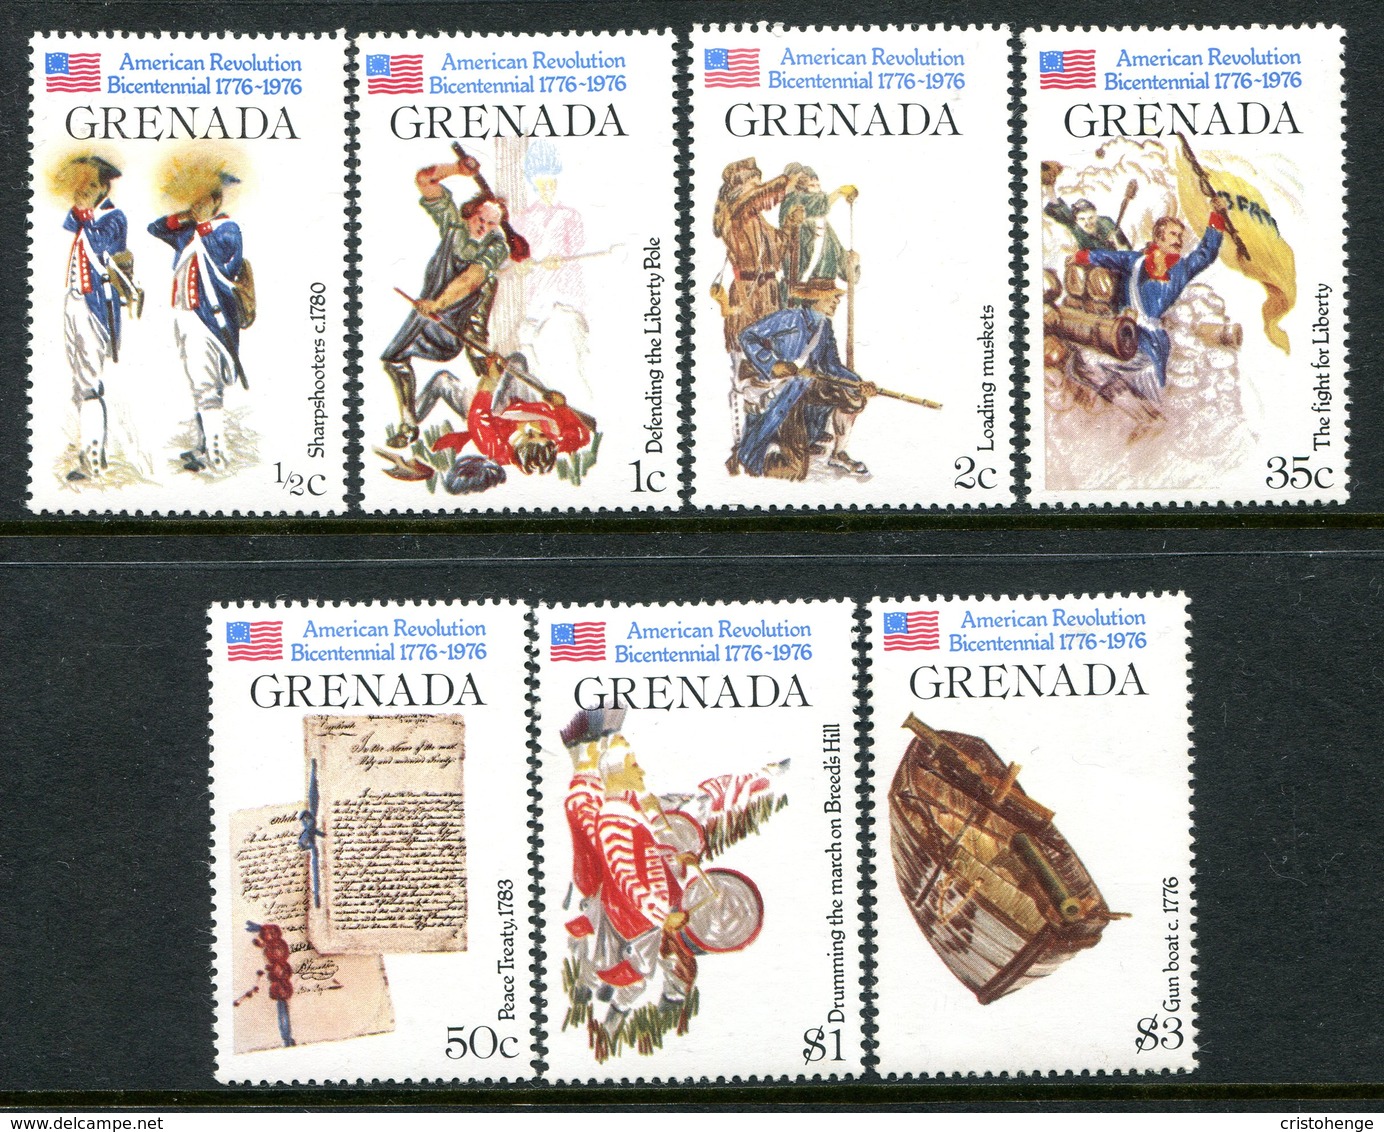 Grenada 1976 Bicentenary Of American Revolution - 2nd Issue Set MNH (SG 785-791) - Grenada (1974-...)